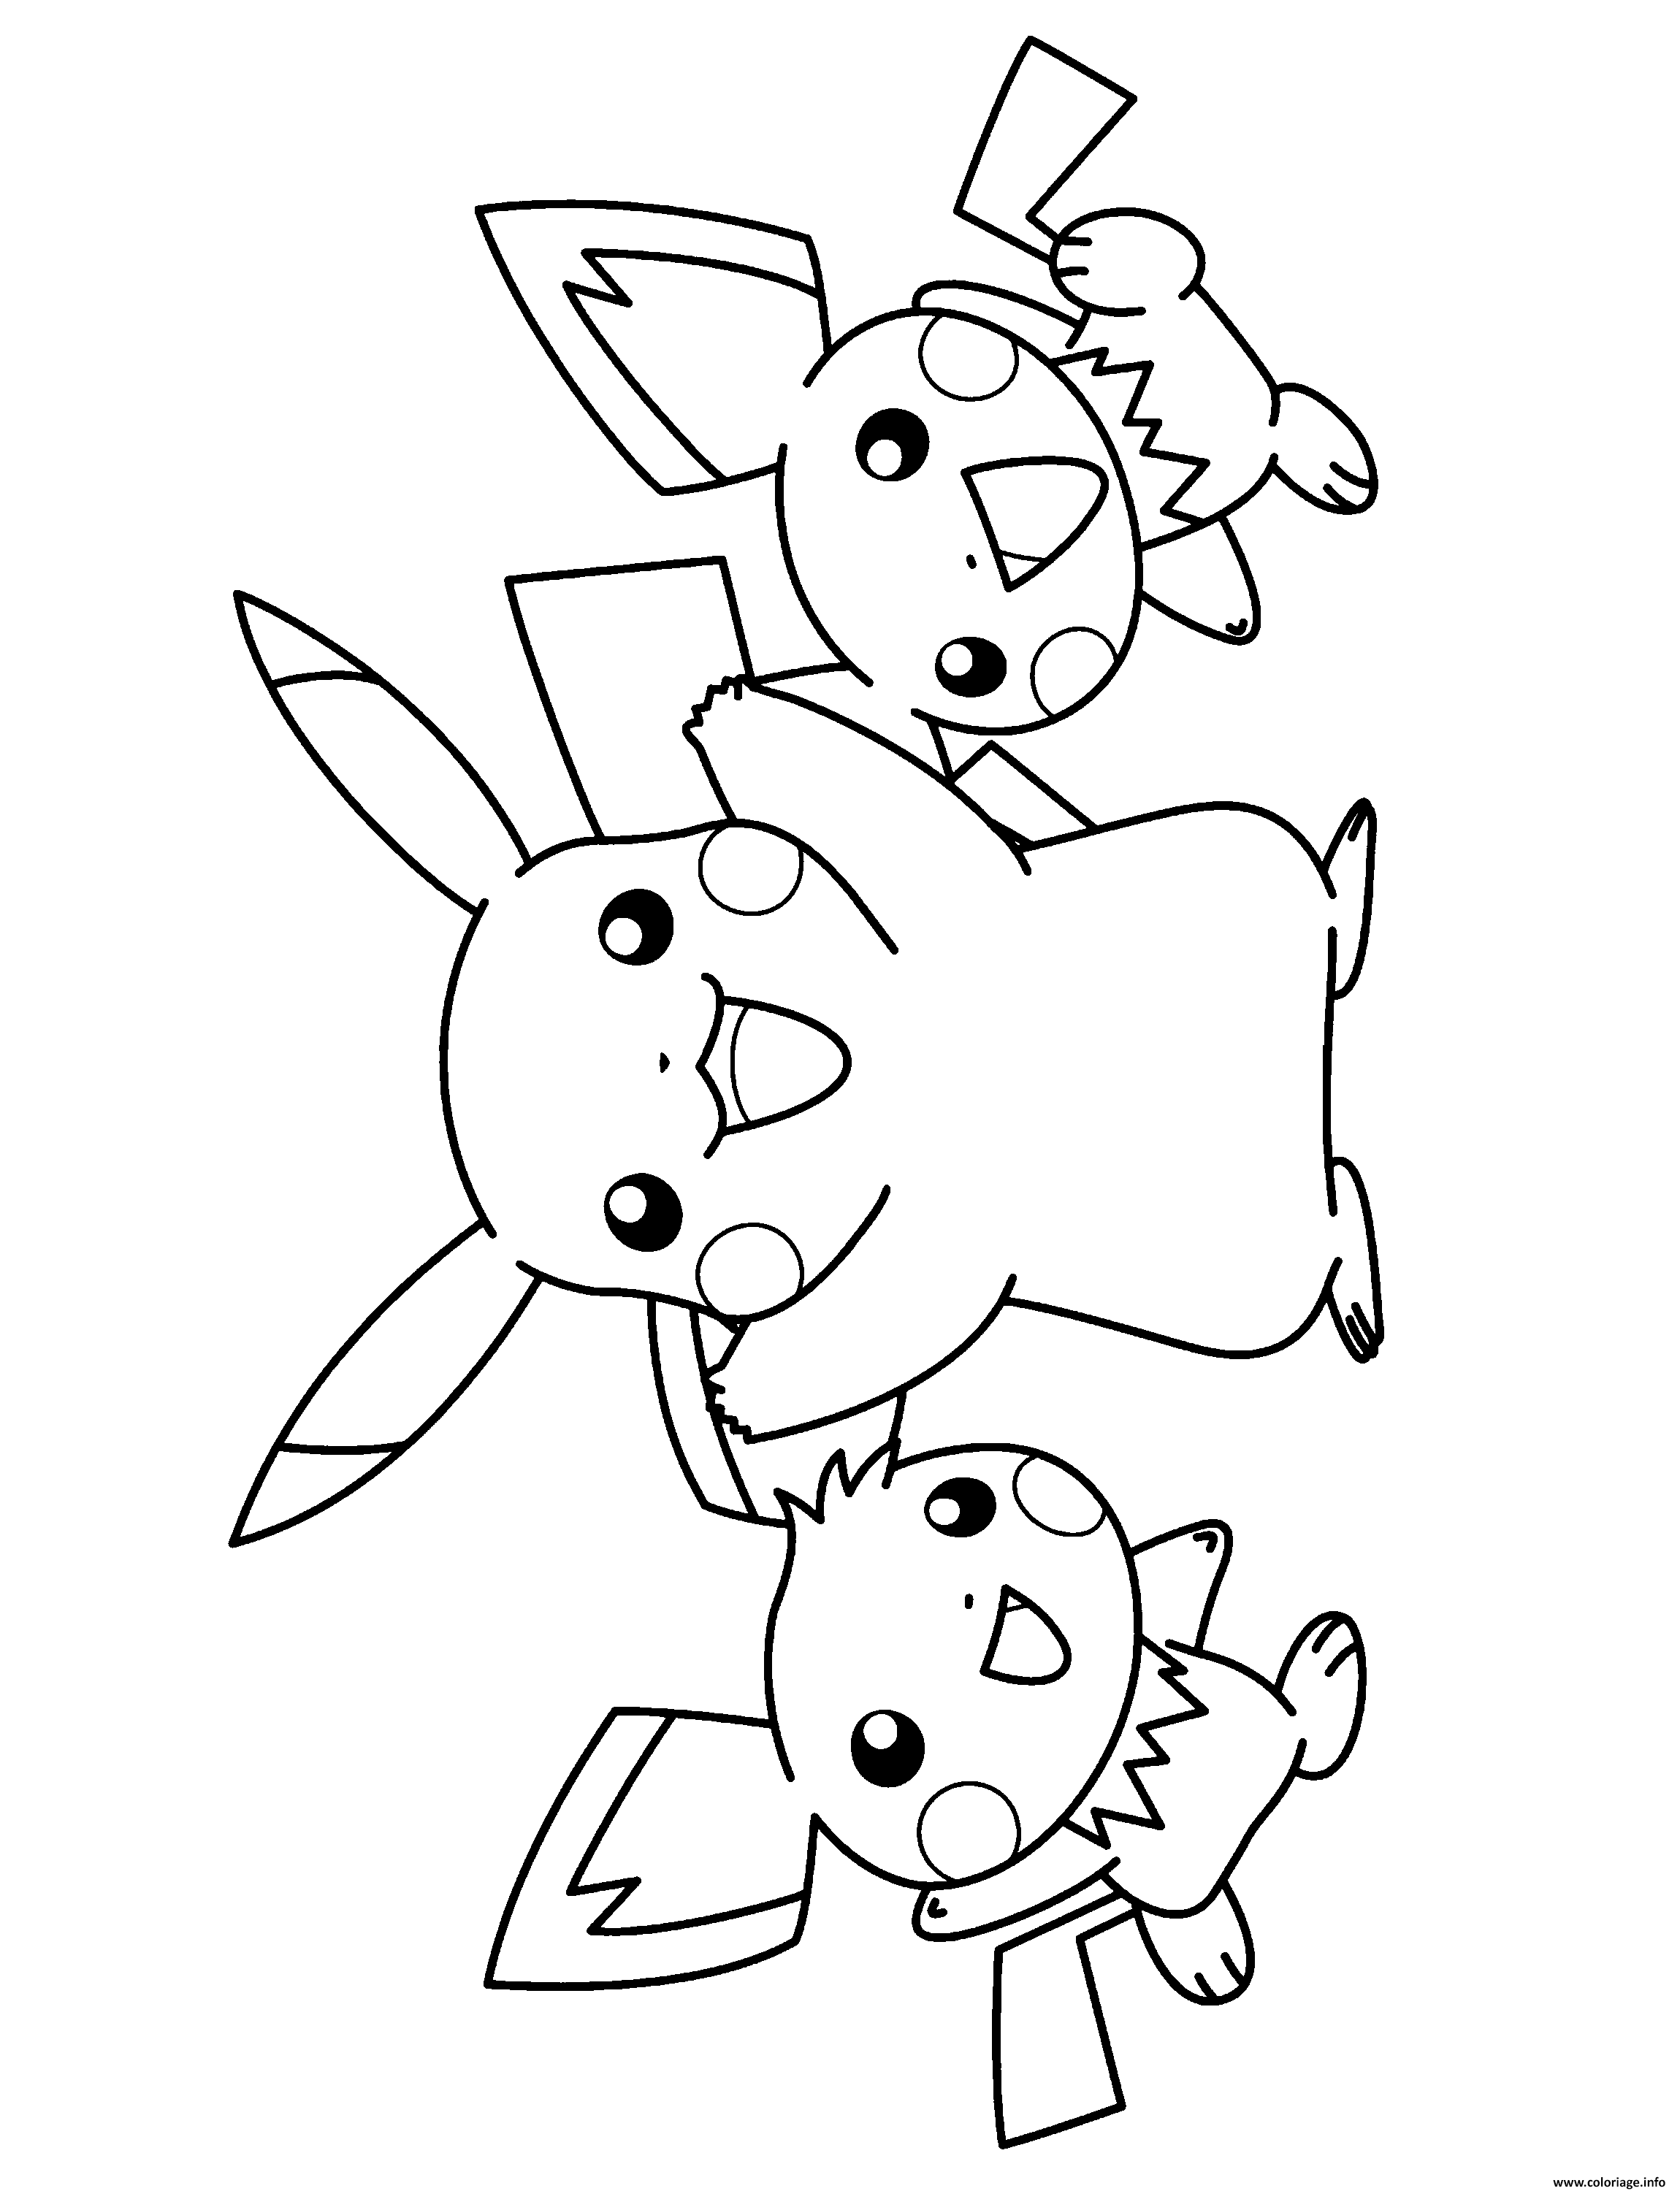 Dessin hugo lescargot pokemon pikachu Coloriage Gratuit   Imprimer